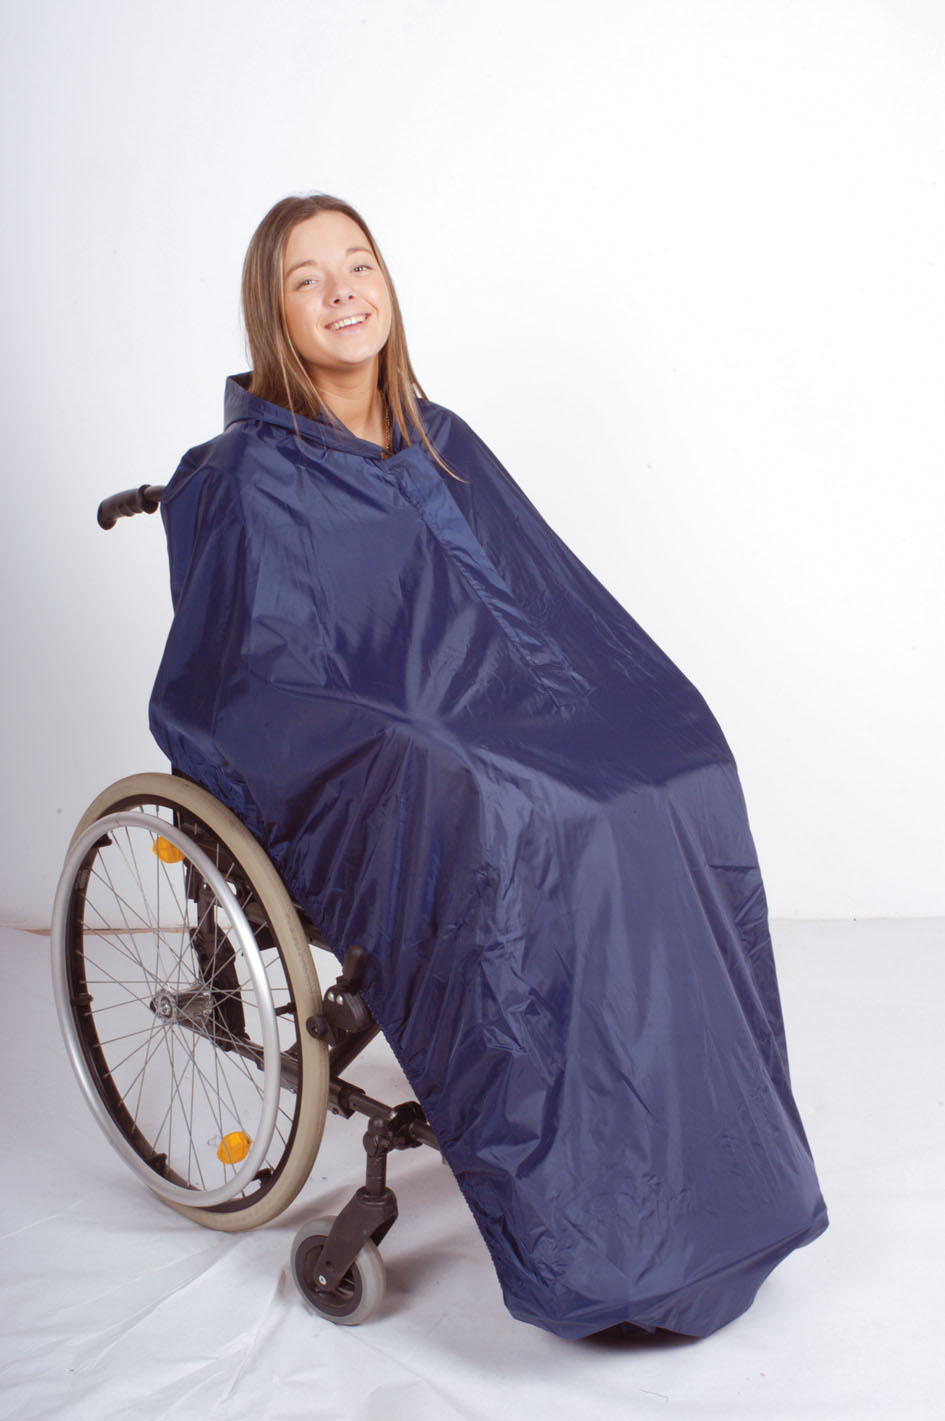 wheel chair bag for catheters, jay 2 wheelchair cushion, everest jennings pneumatic wheelchair tires, leg cushion for electric wheelchair